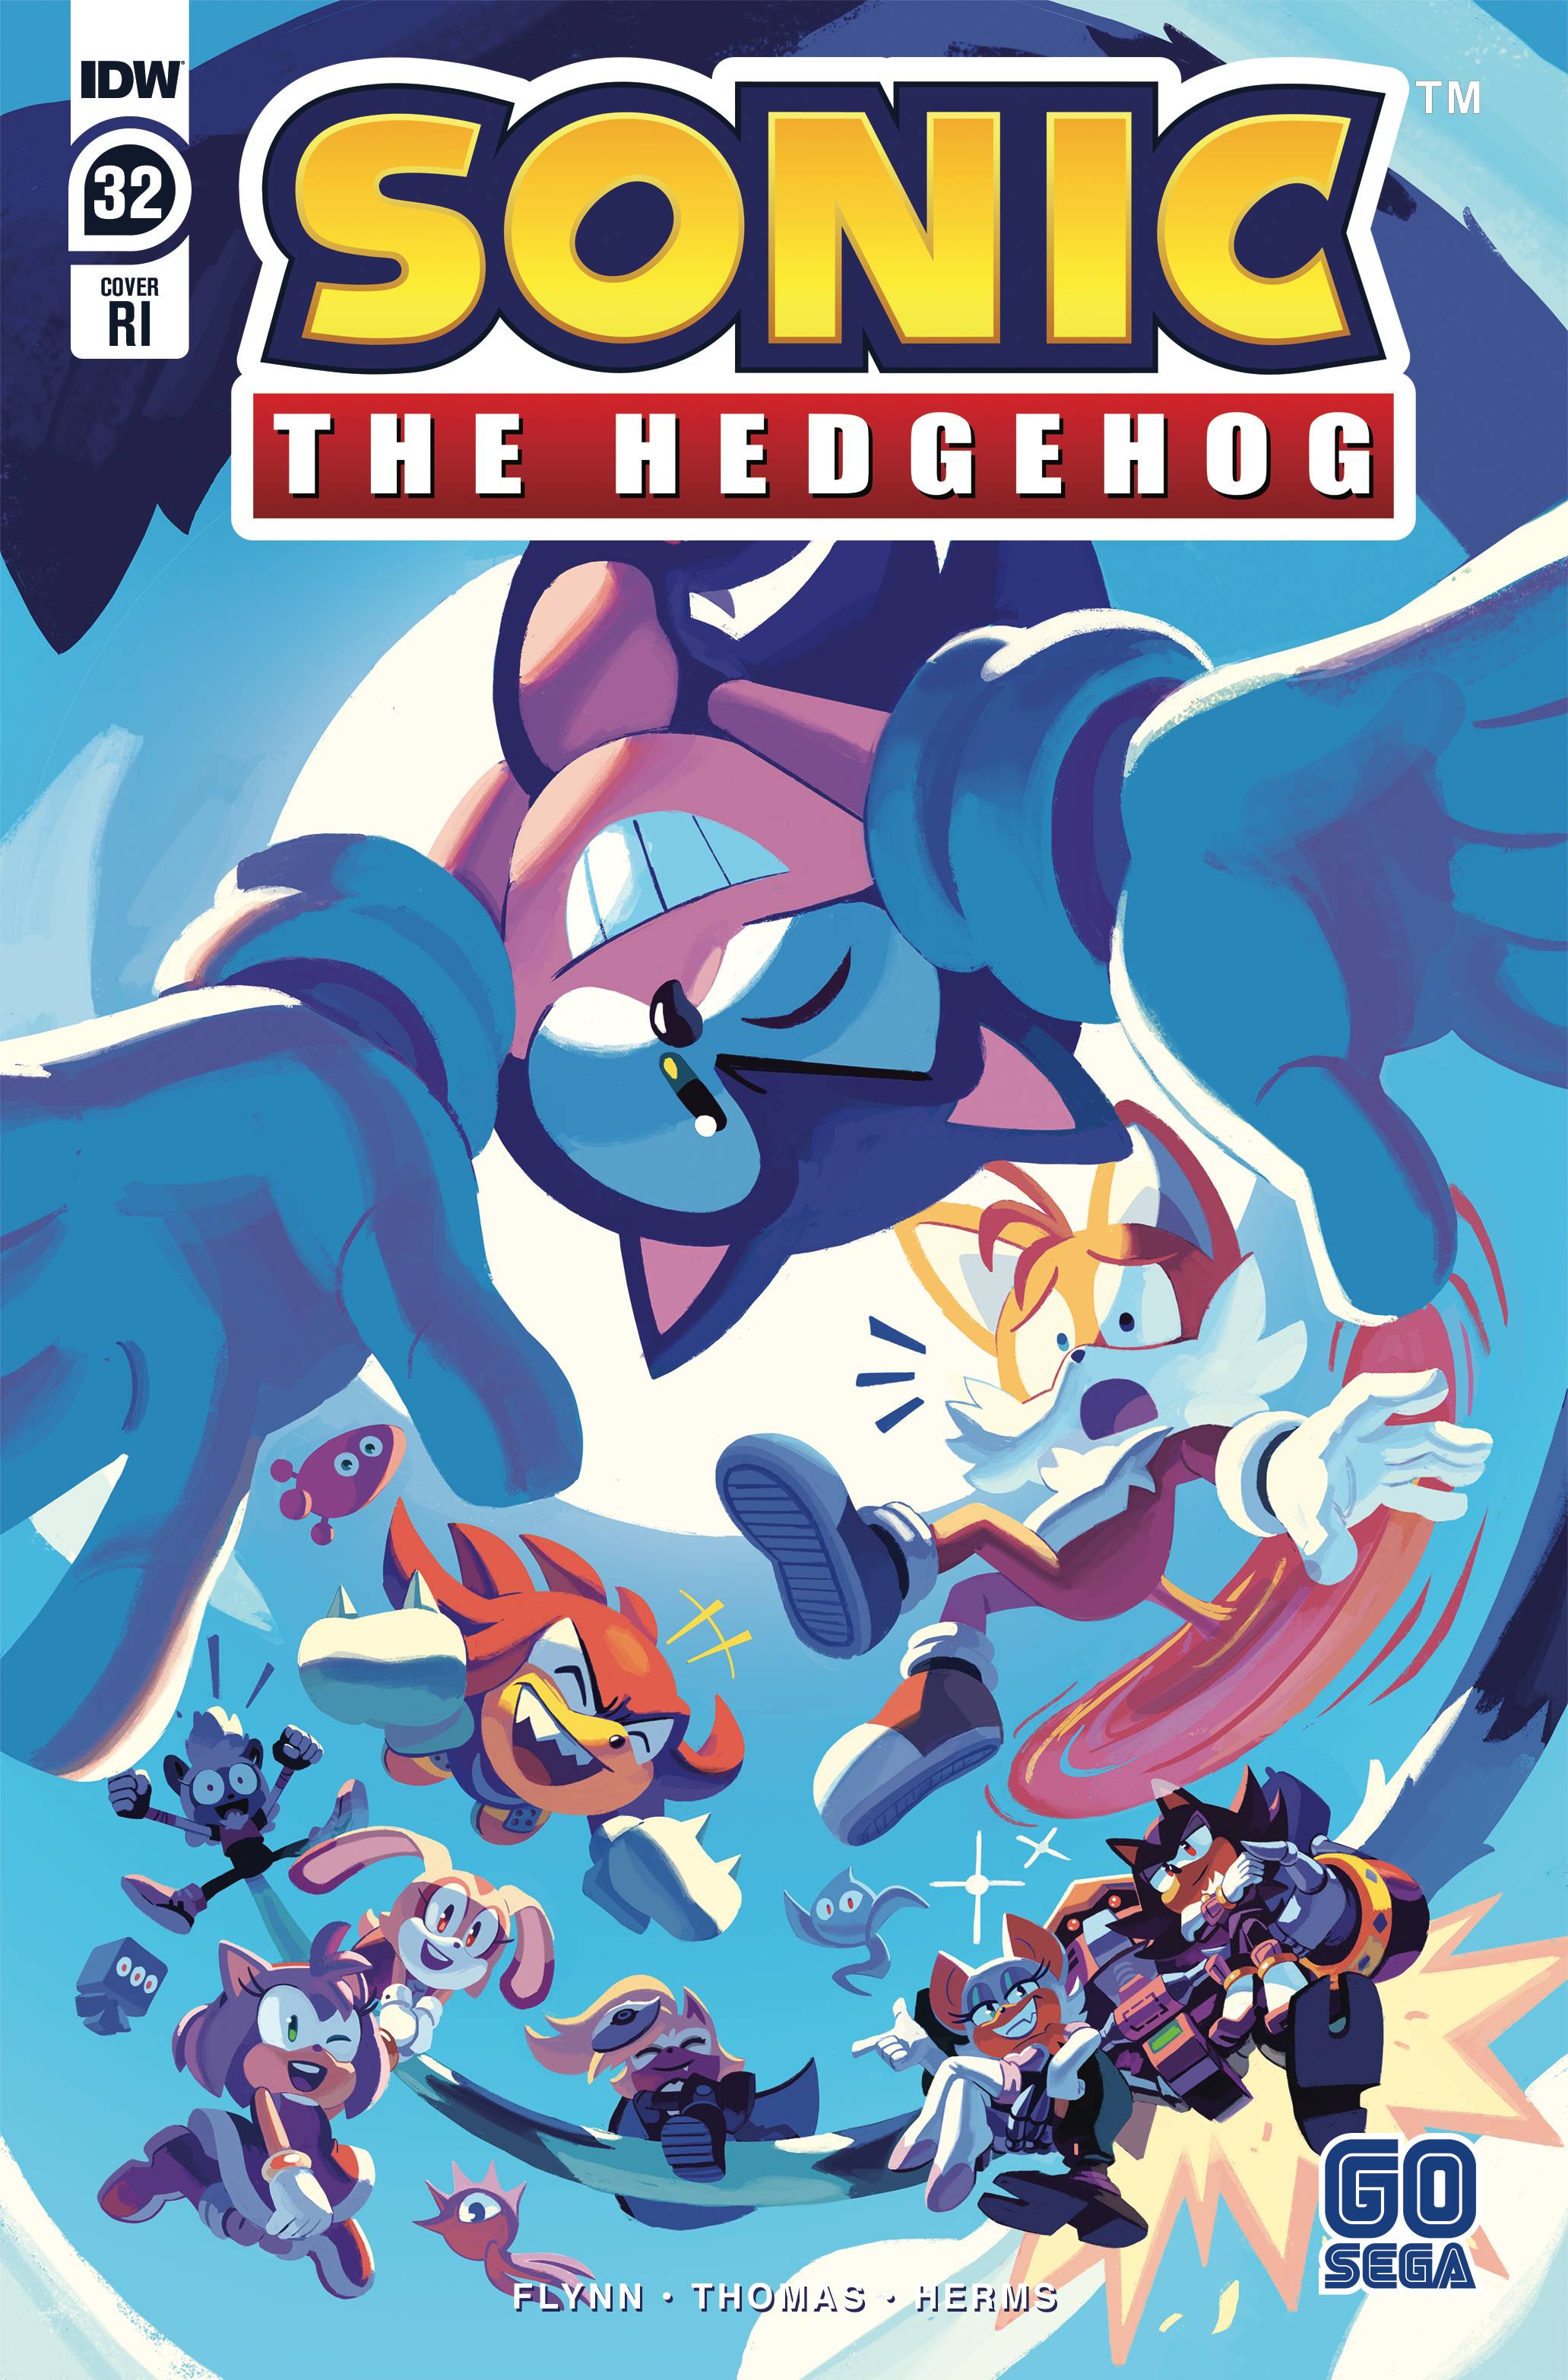 Cover RI of IDW Sonic #12 by Nathalie Fourdraine! : r/SonicTheHedgehog